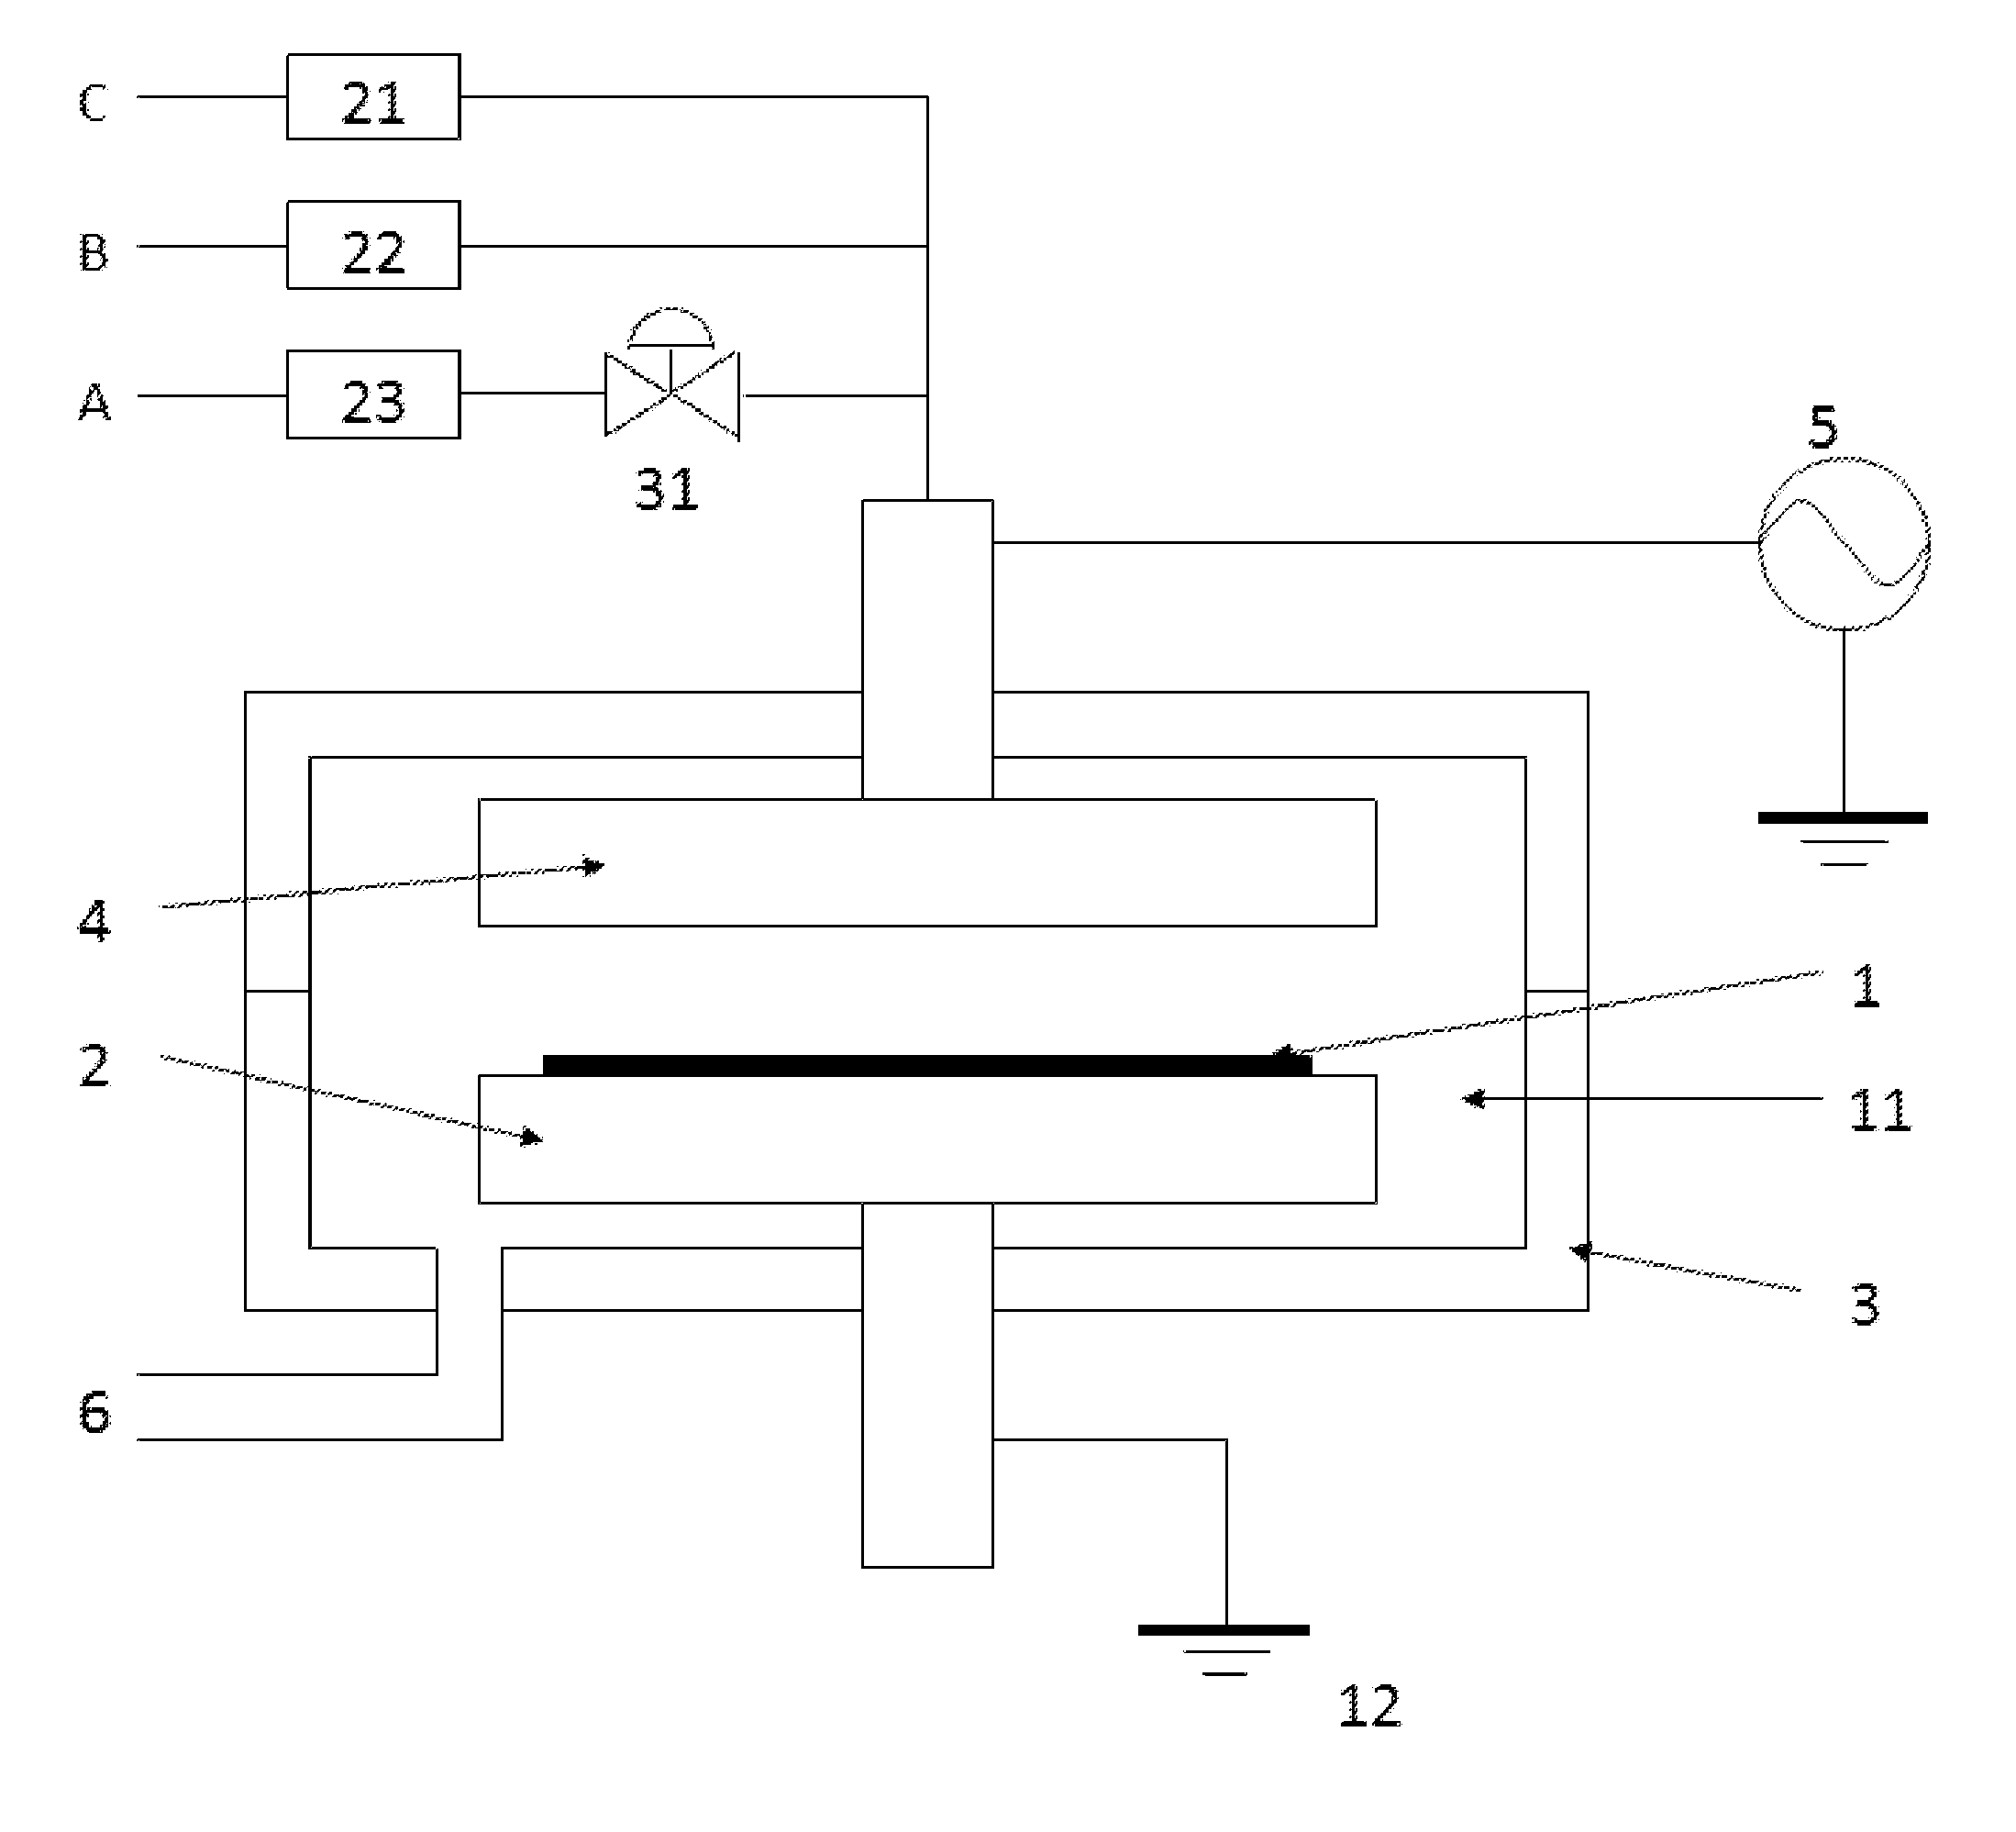 Method of forming conformal film having si-N bonds on high-aspect ratio pattern